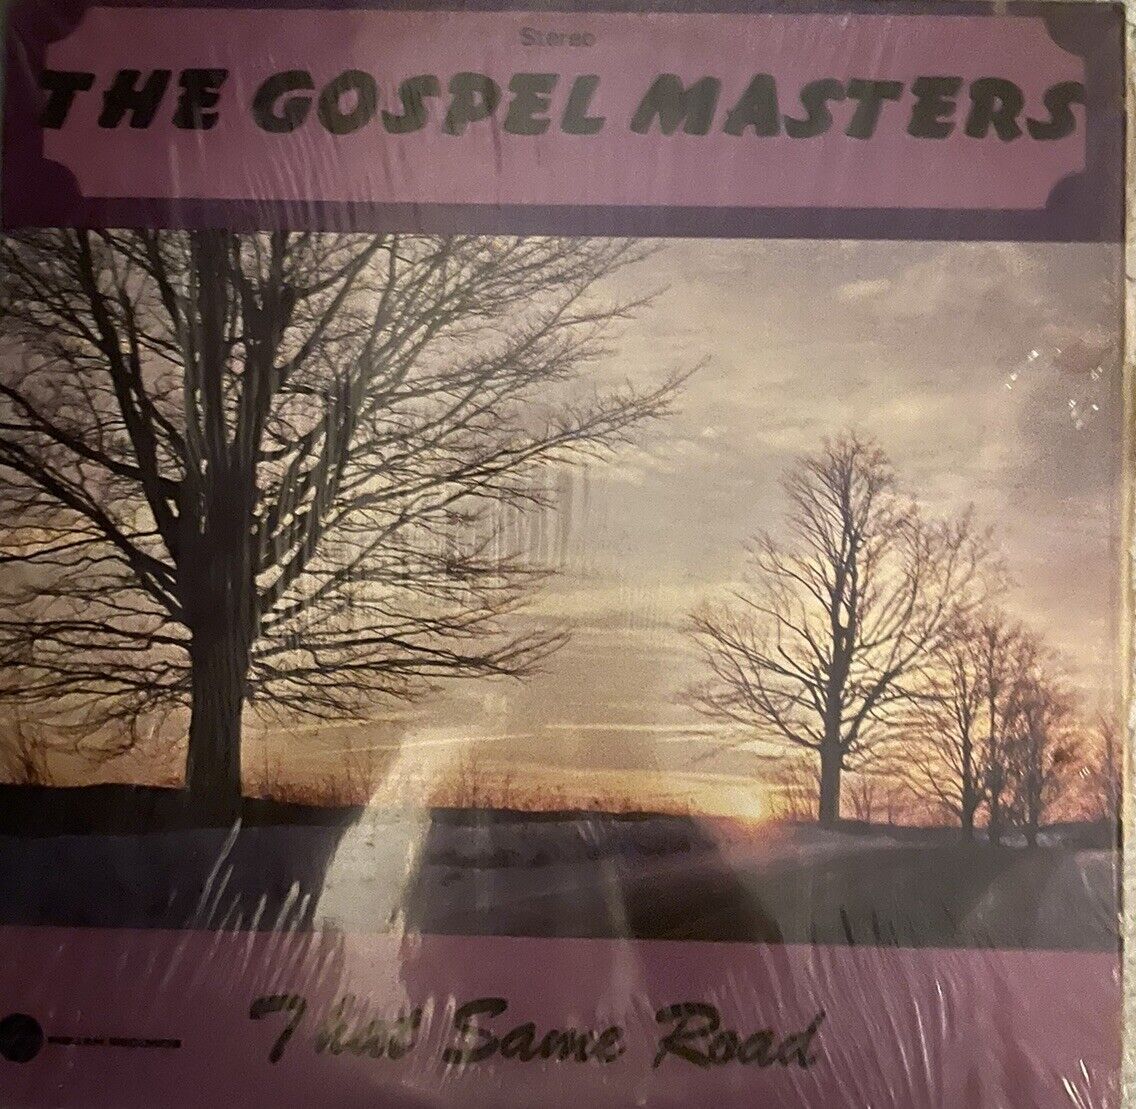 Rare- The Gospel Masters Lp That Same Road, Bluegrass, Bryson City N.C., Shrink